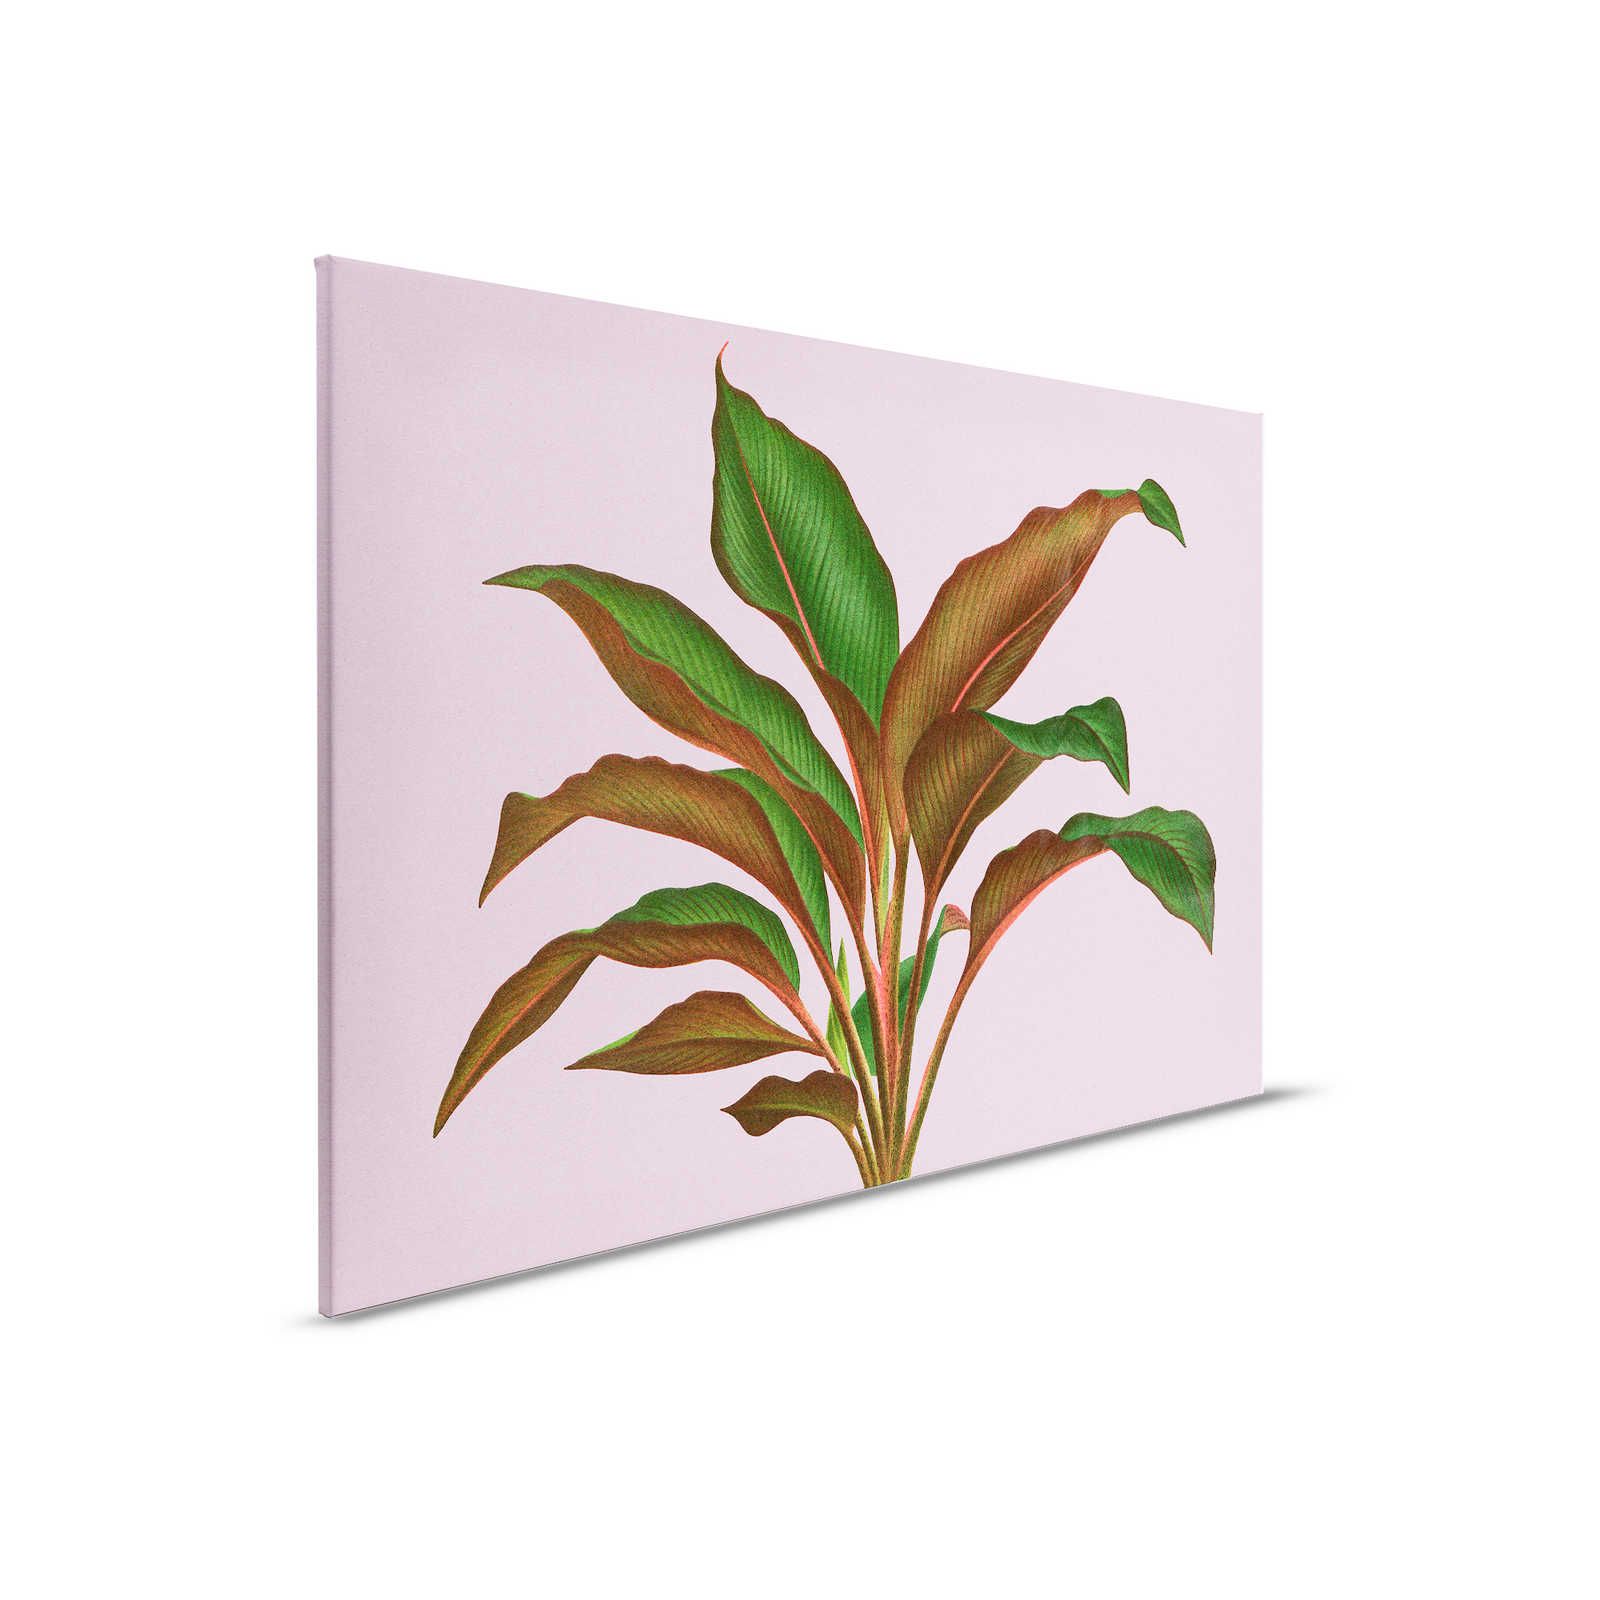         Leaf Garden 3 - Blätter Leinwandbild Rosa mit tropischem Farnblatt – 0,90 m x 0,60 m
    